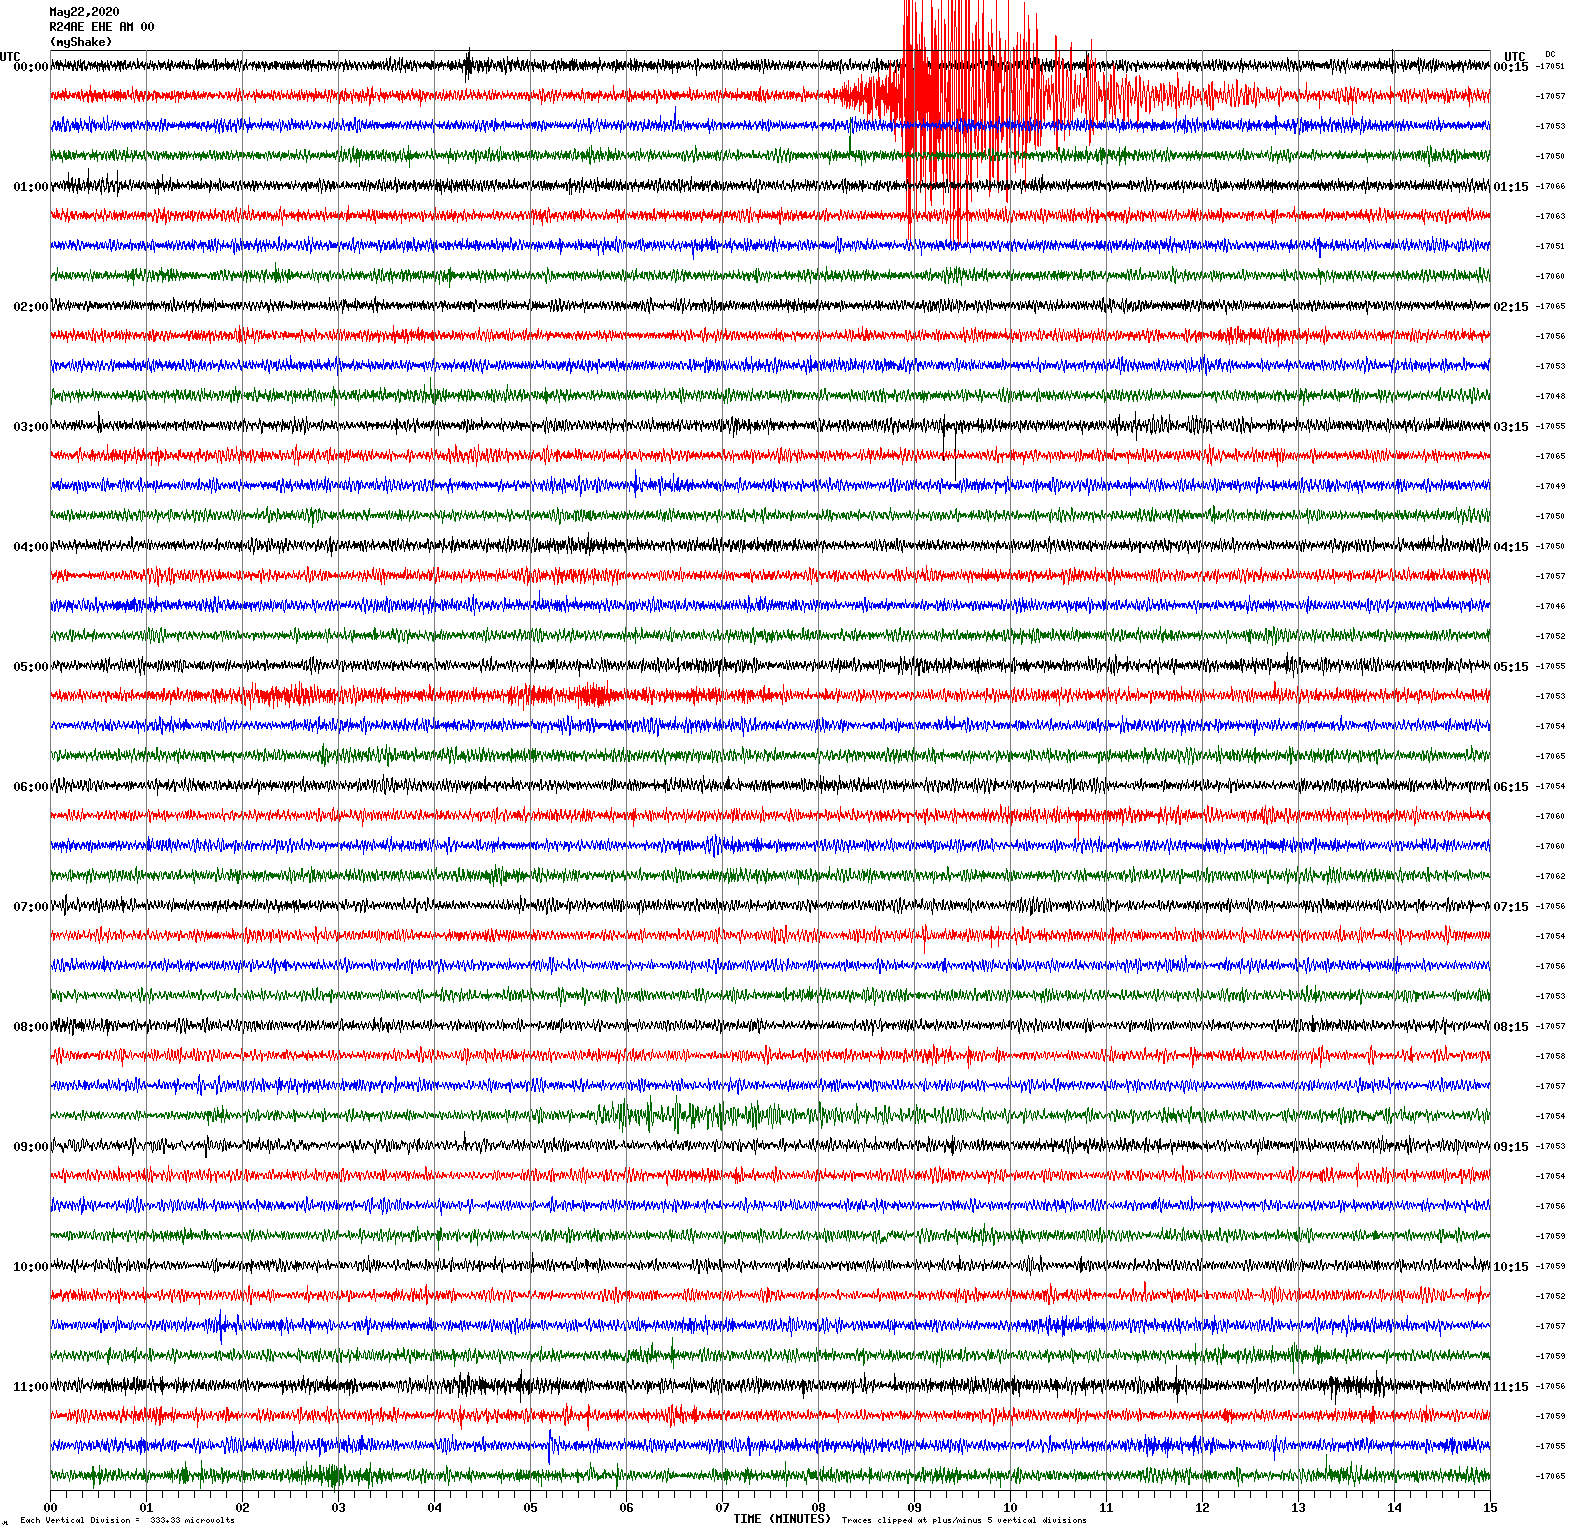 /seismic-data/R24AE/R24AE_EHE_AM_00.2020052200.gif